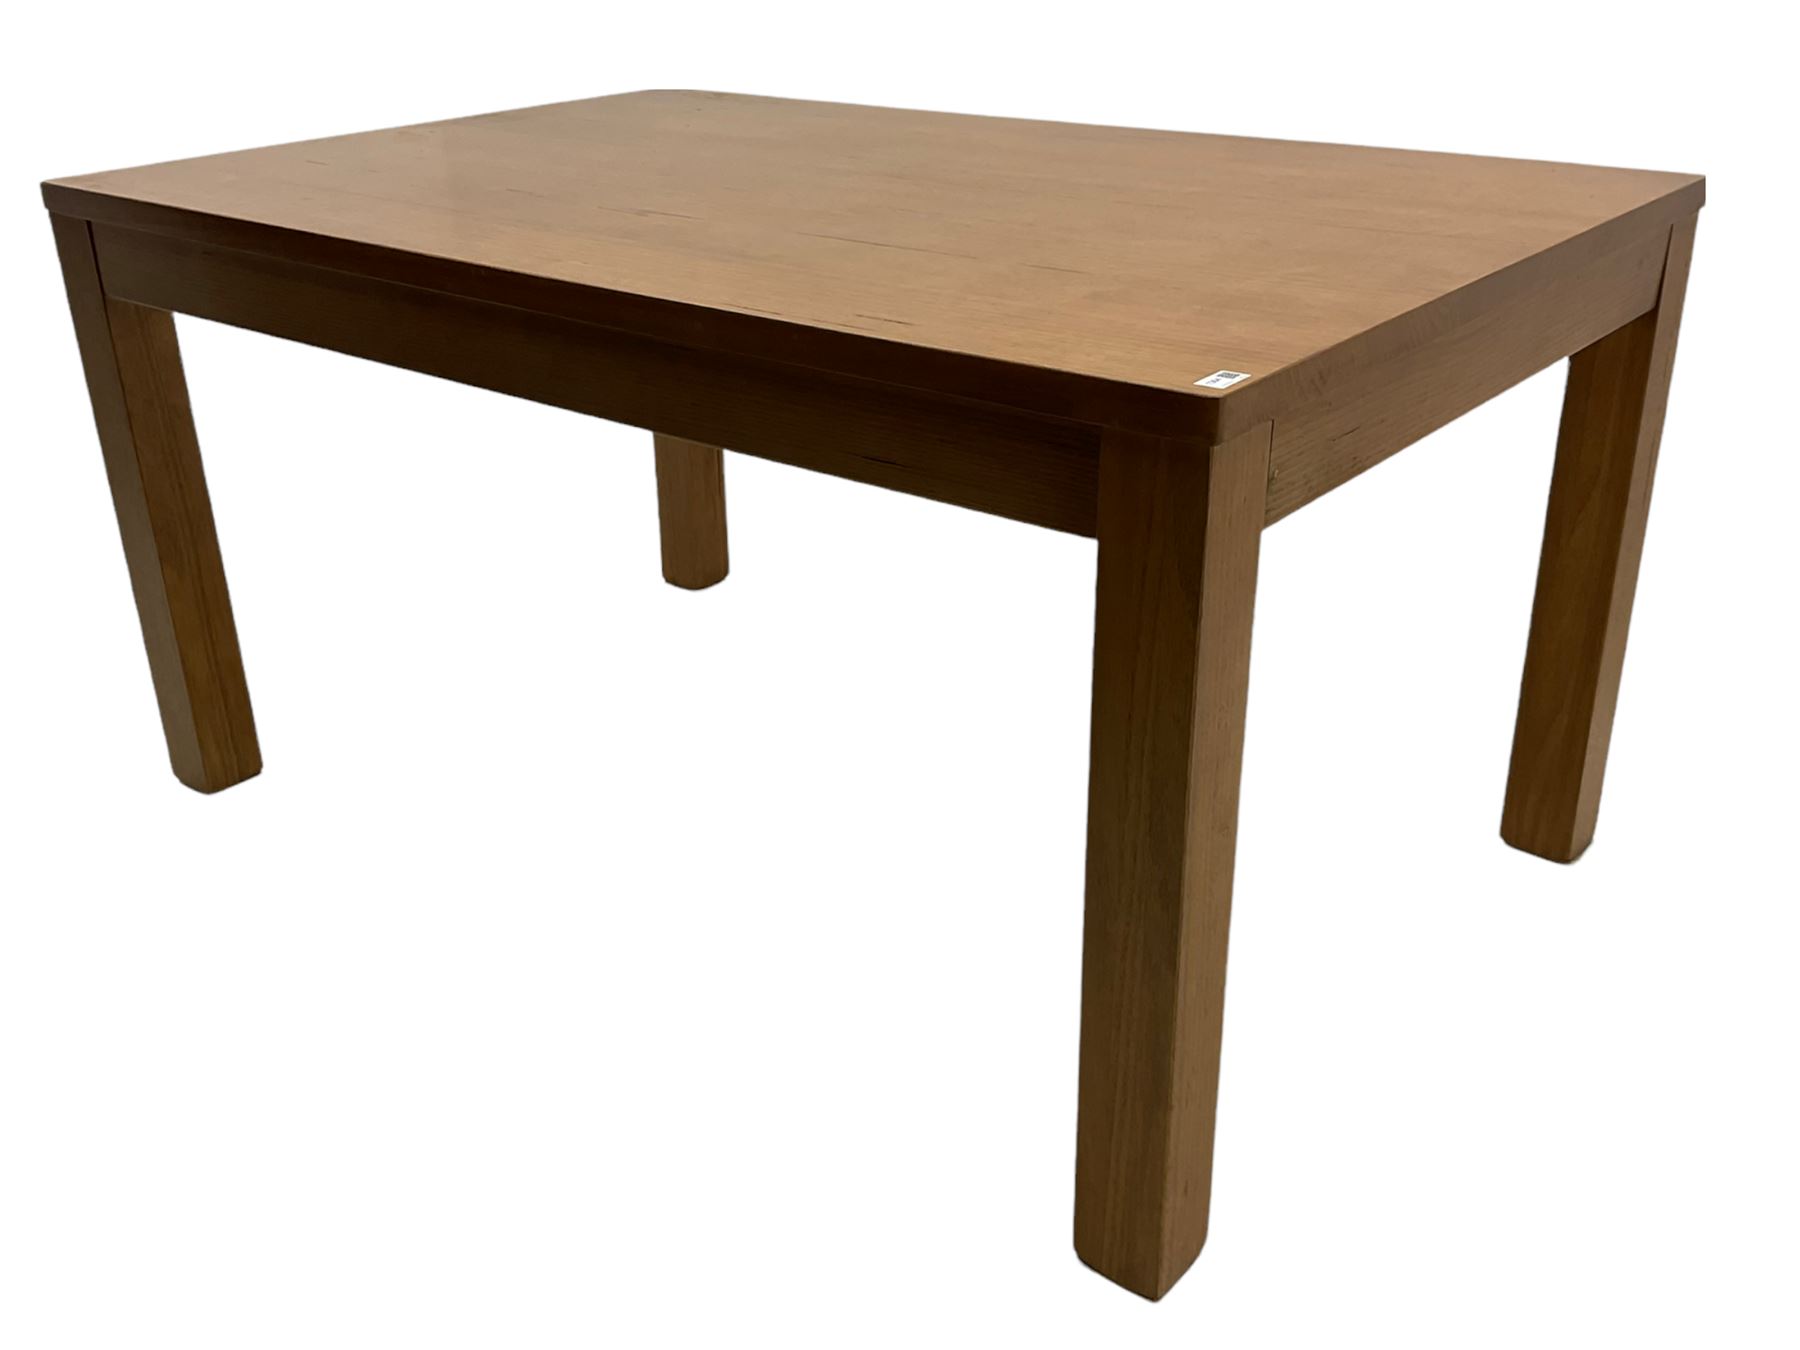 Light oak rectangular dining table - Image 4 of 5